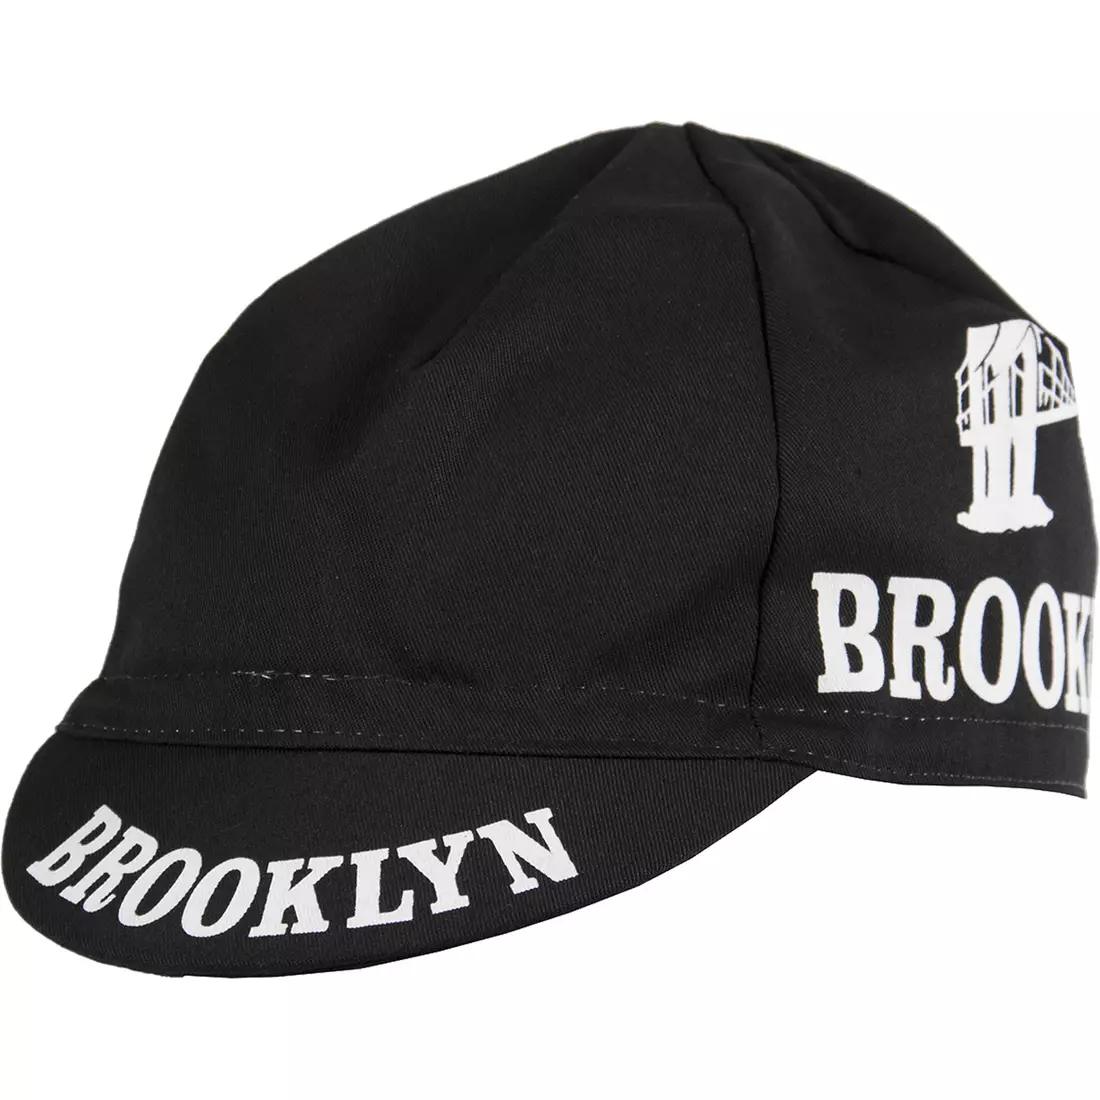 GIORDANA SS18 cycling cap - Brooklyn - Black/White GI-COCA-TEAM-BRBK one size